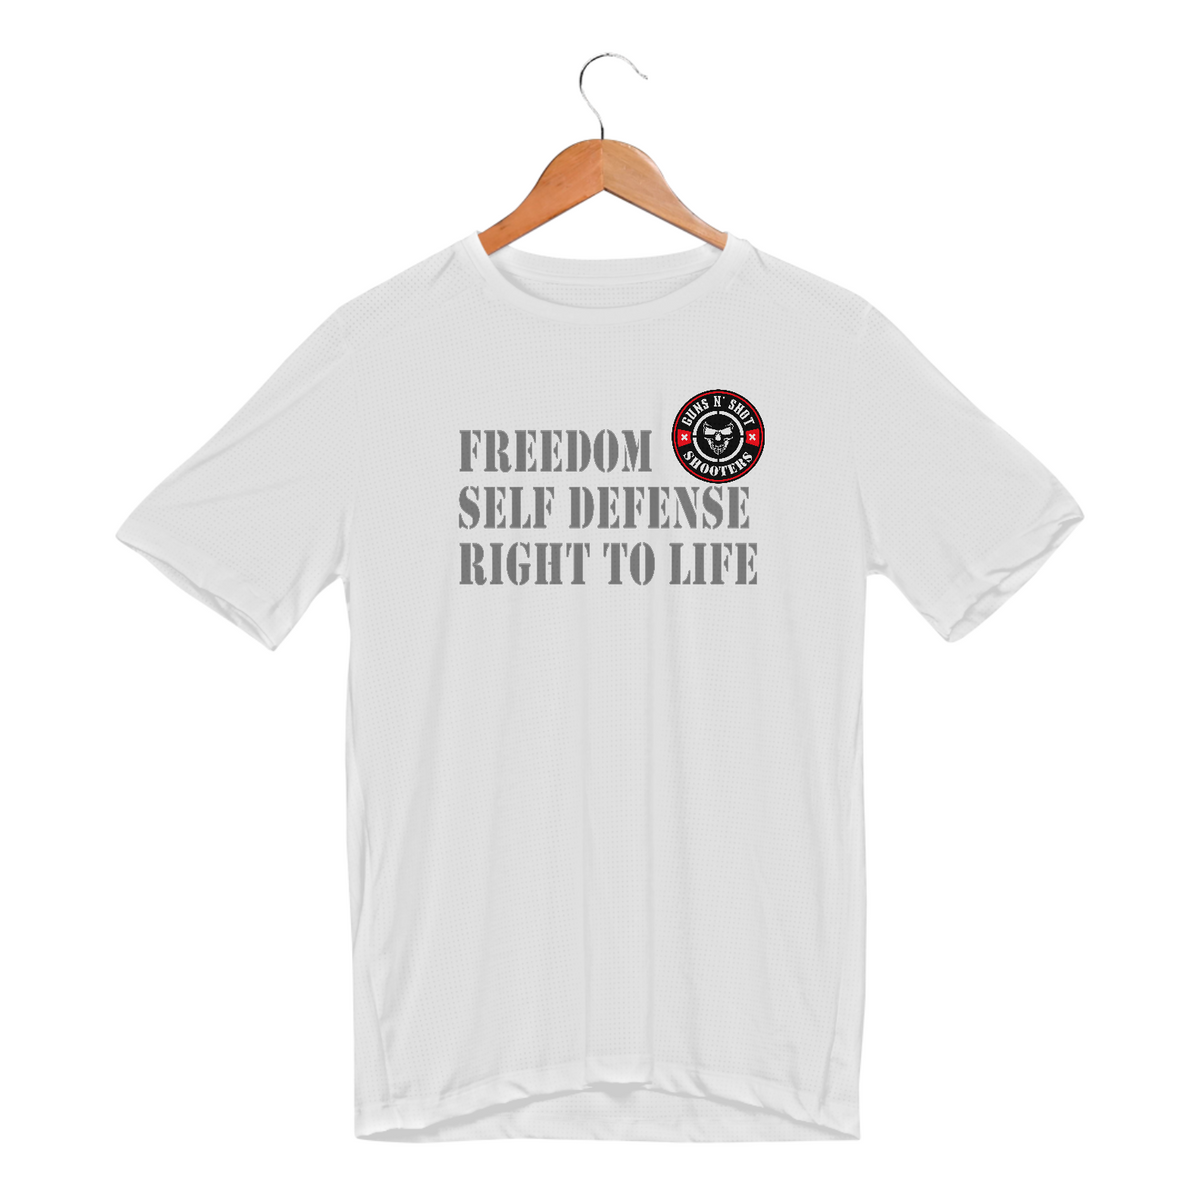 Nome do produto: Right to life